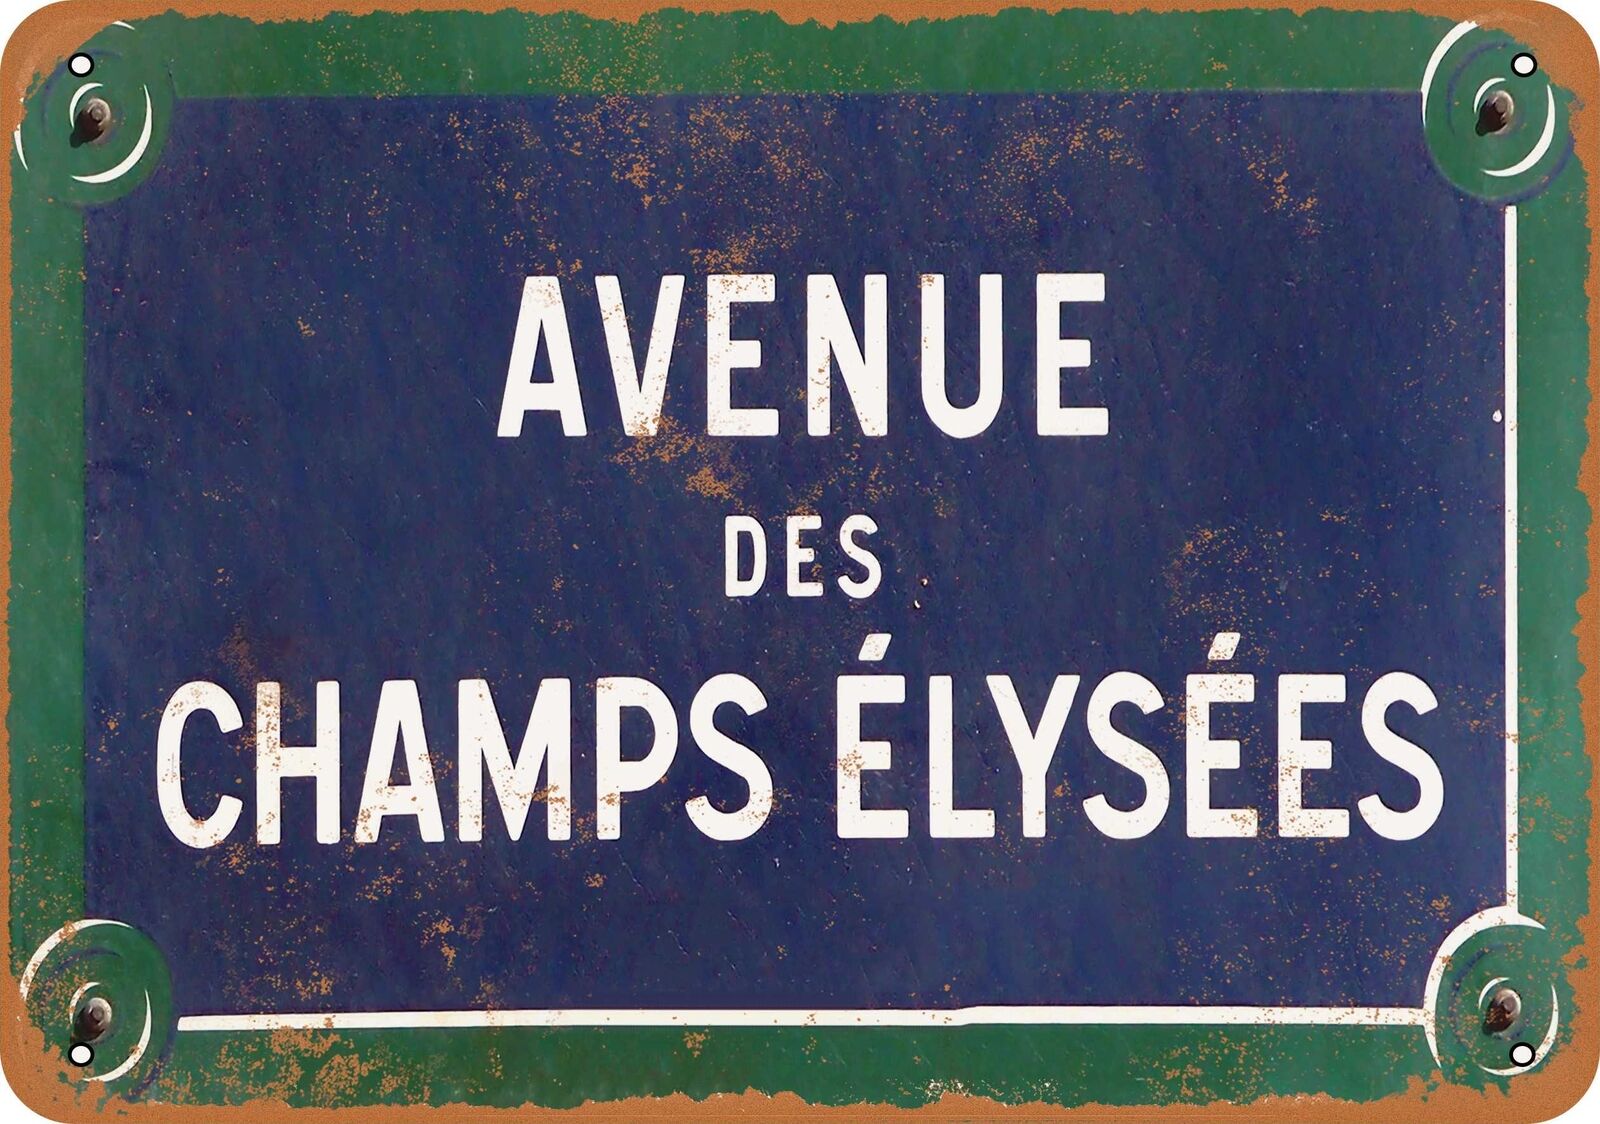 Metal Sign - Avenue des Champs Elysees - Vintage Look Reproduction